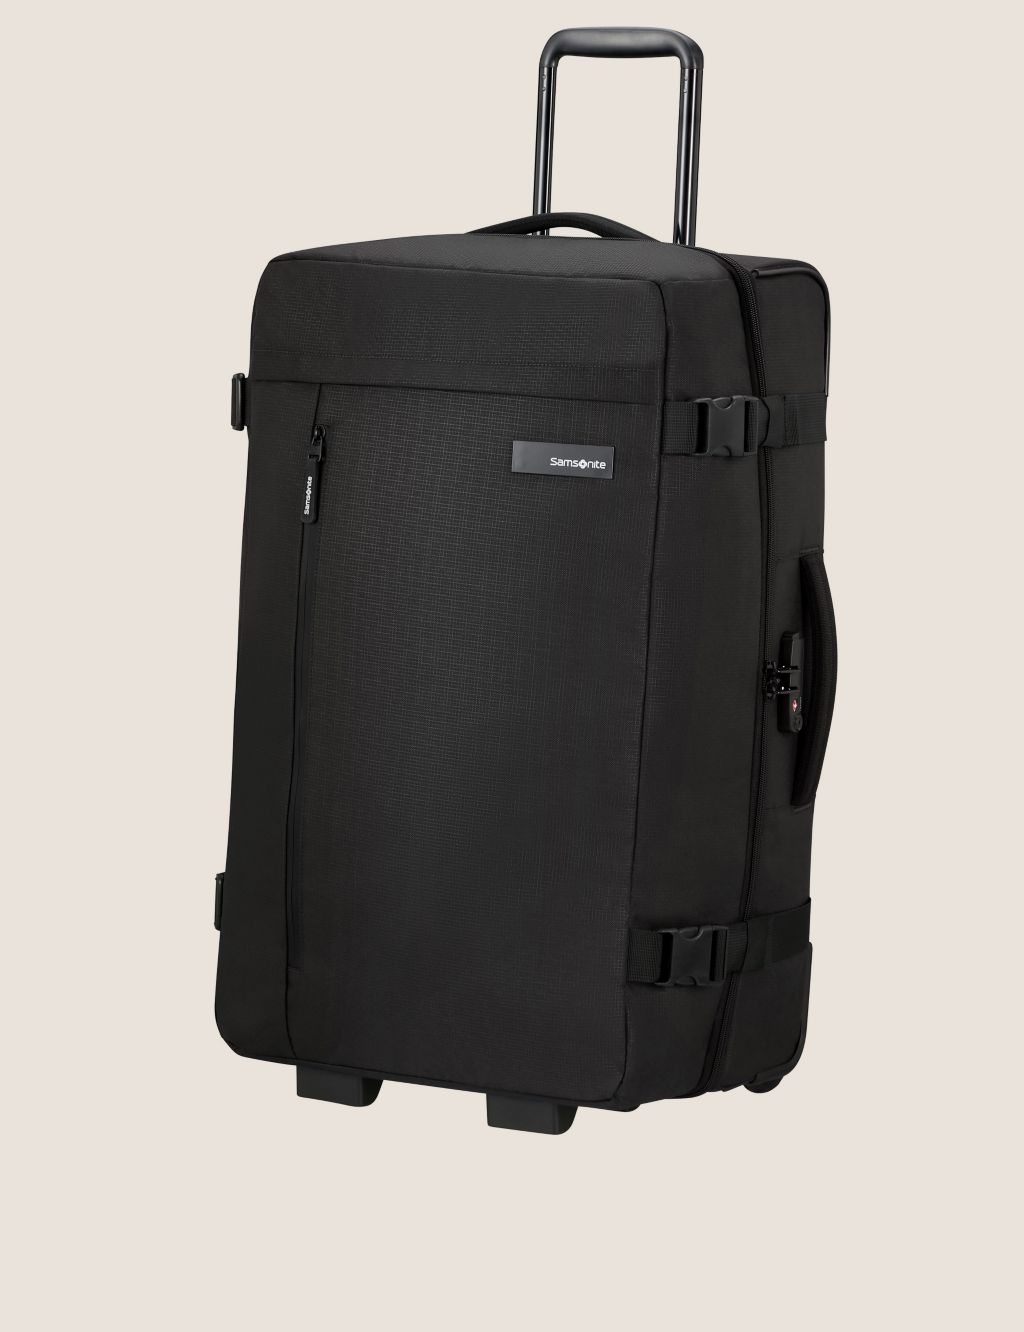 Roader 2 Wheel Soft Medium Suitcase image 1